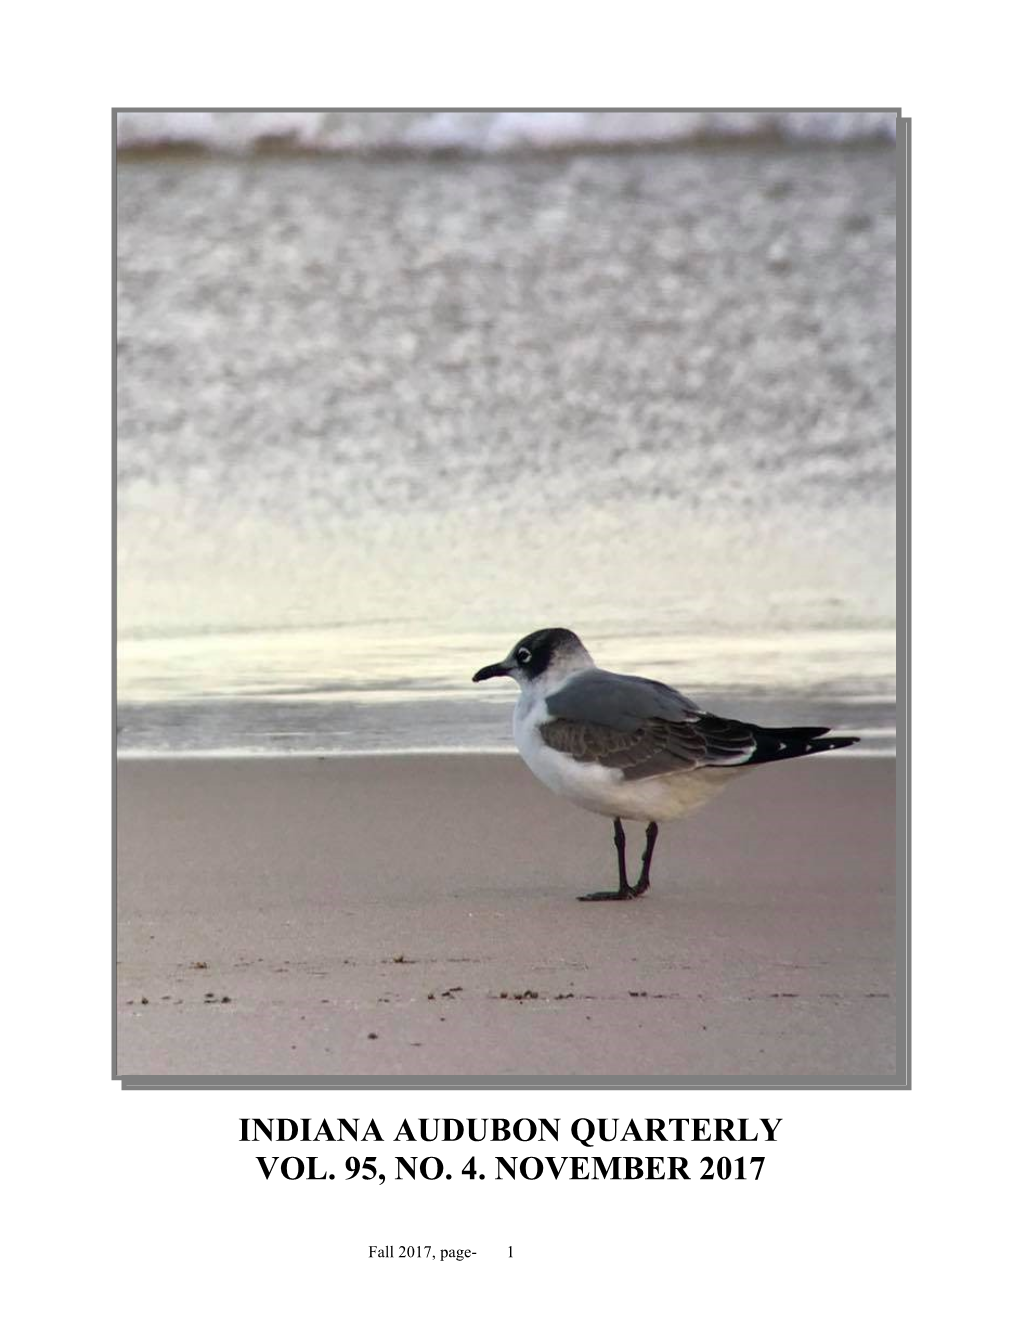 Indiana Audubon Quarterly Vol. 95, No. 4. November 2017